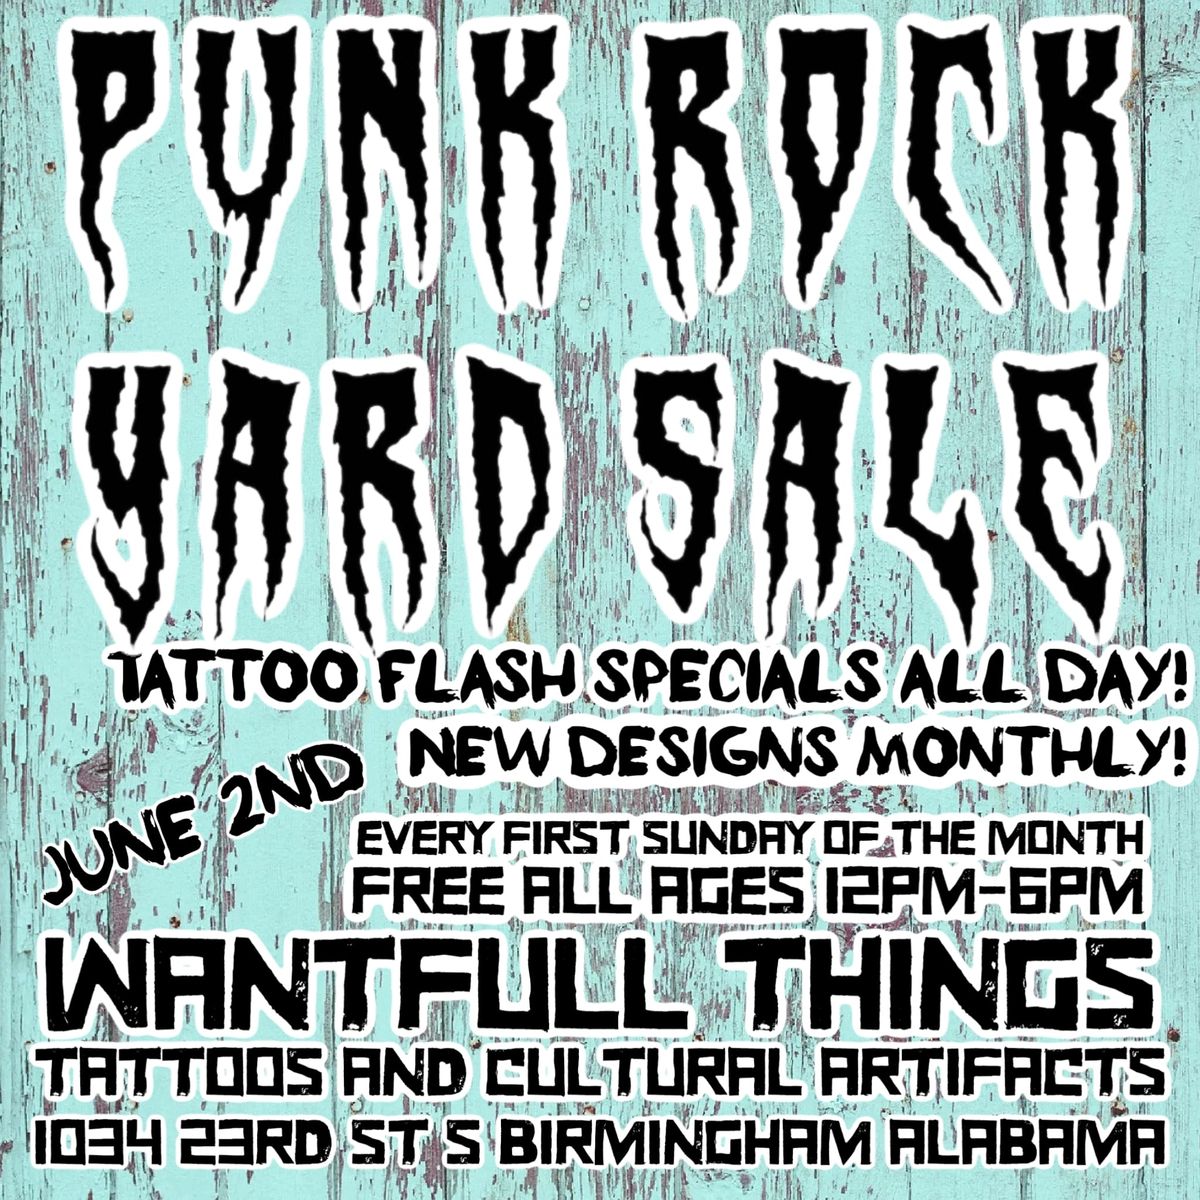 Punk Rock Yard Sale 